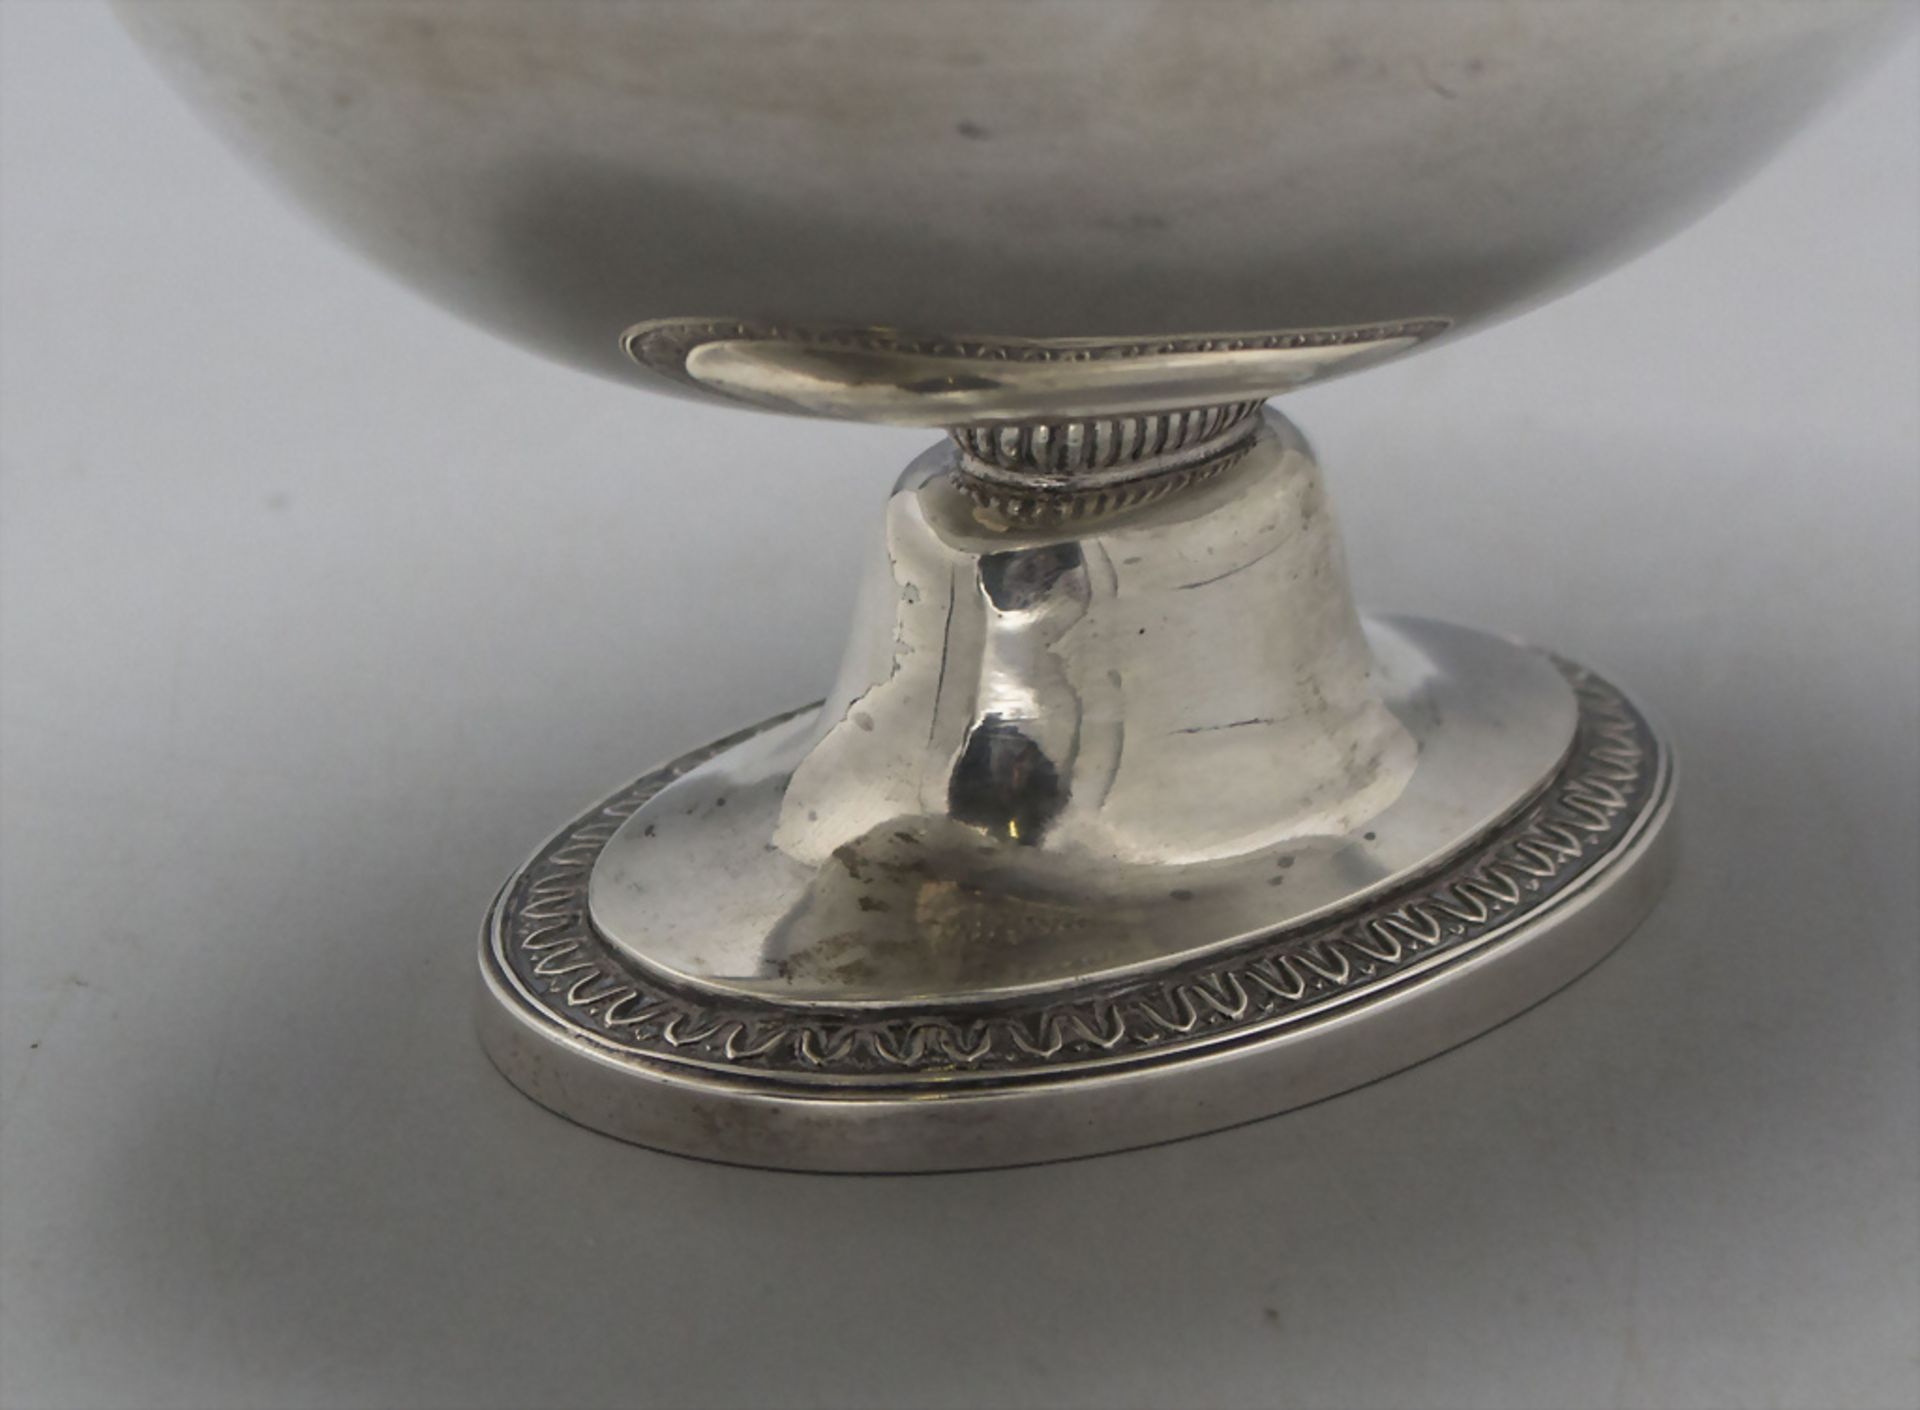 Empire Konfektschale / A silver Empire candy bowl, F. Gely, Lausanne, um 1810 - Image 2 of 3